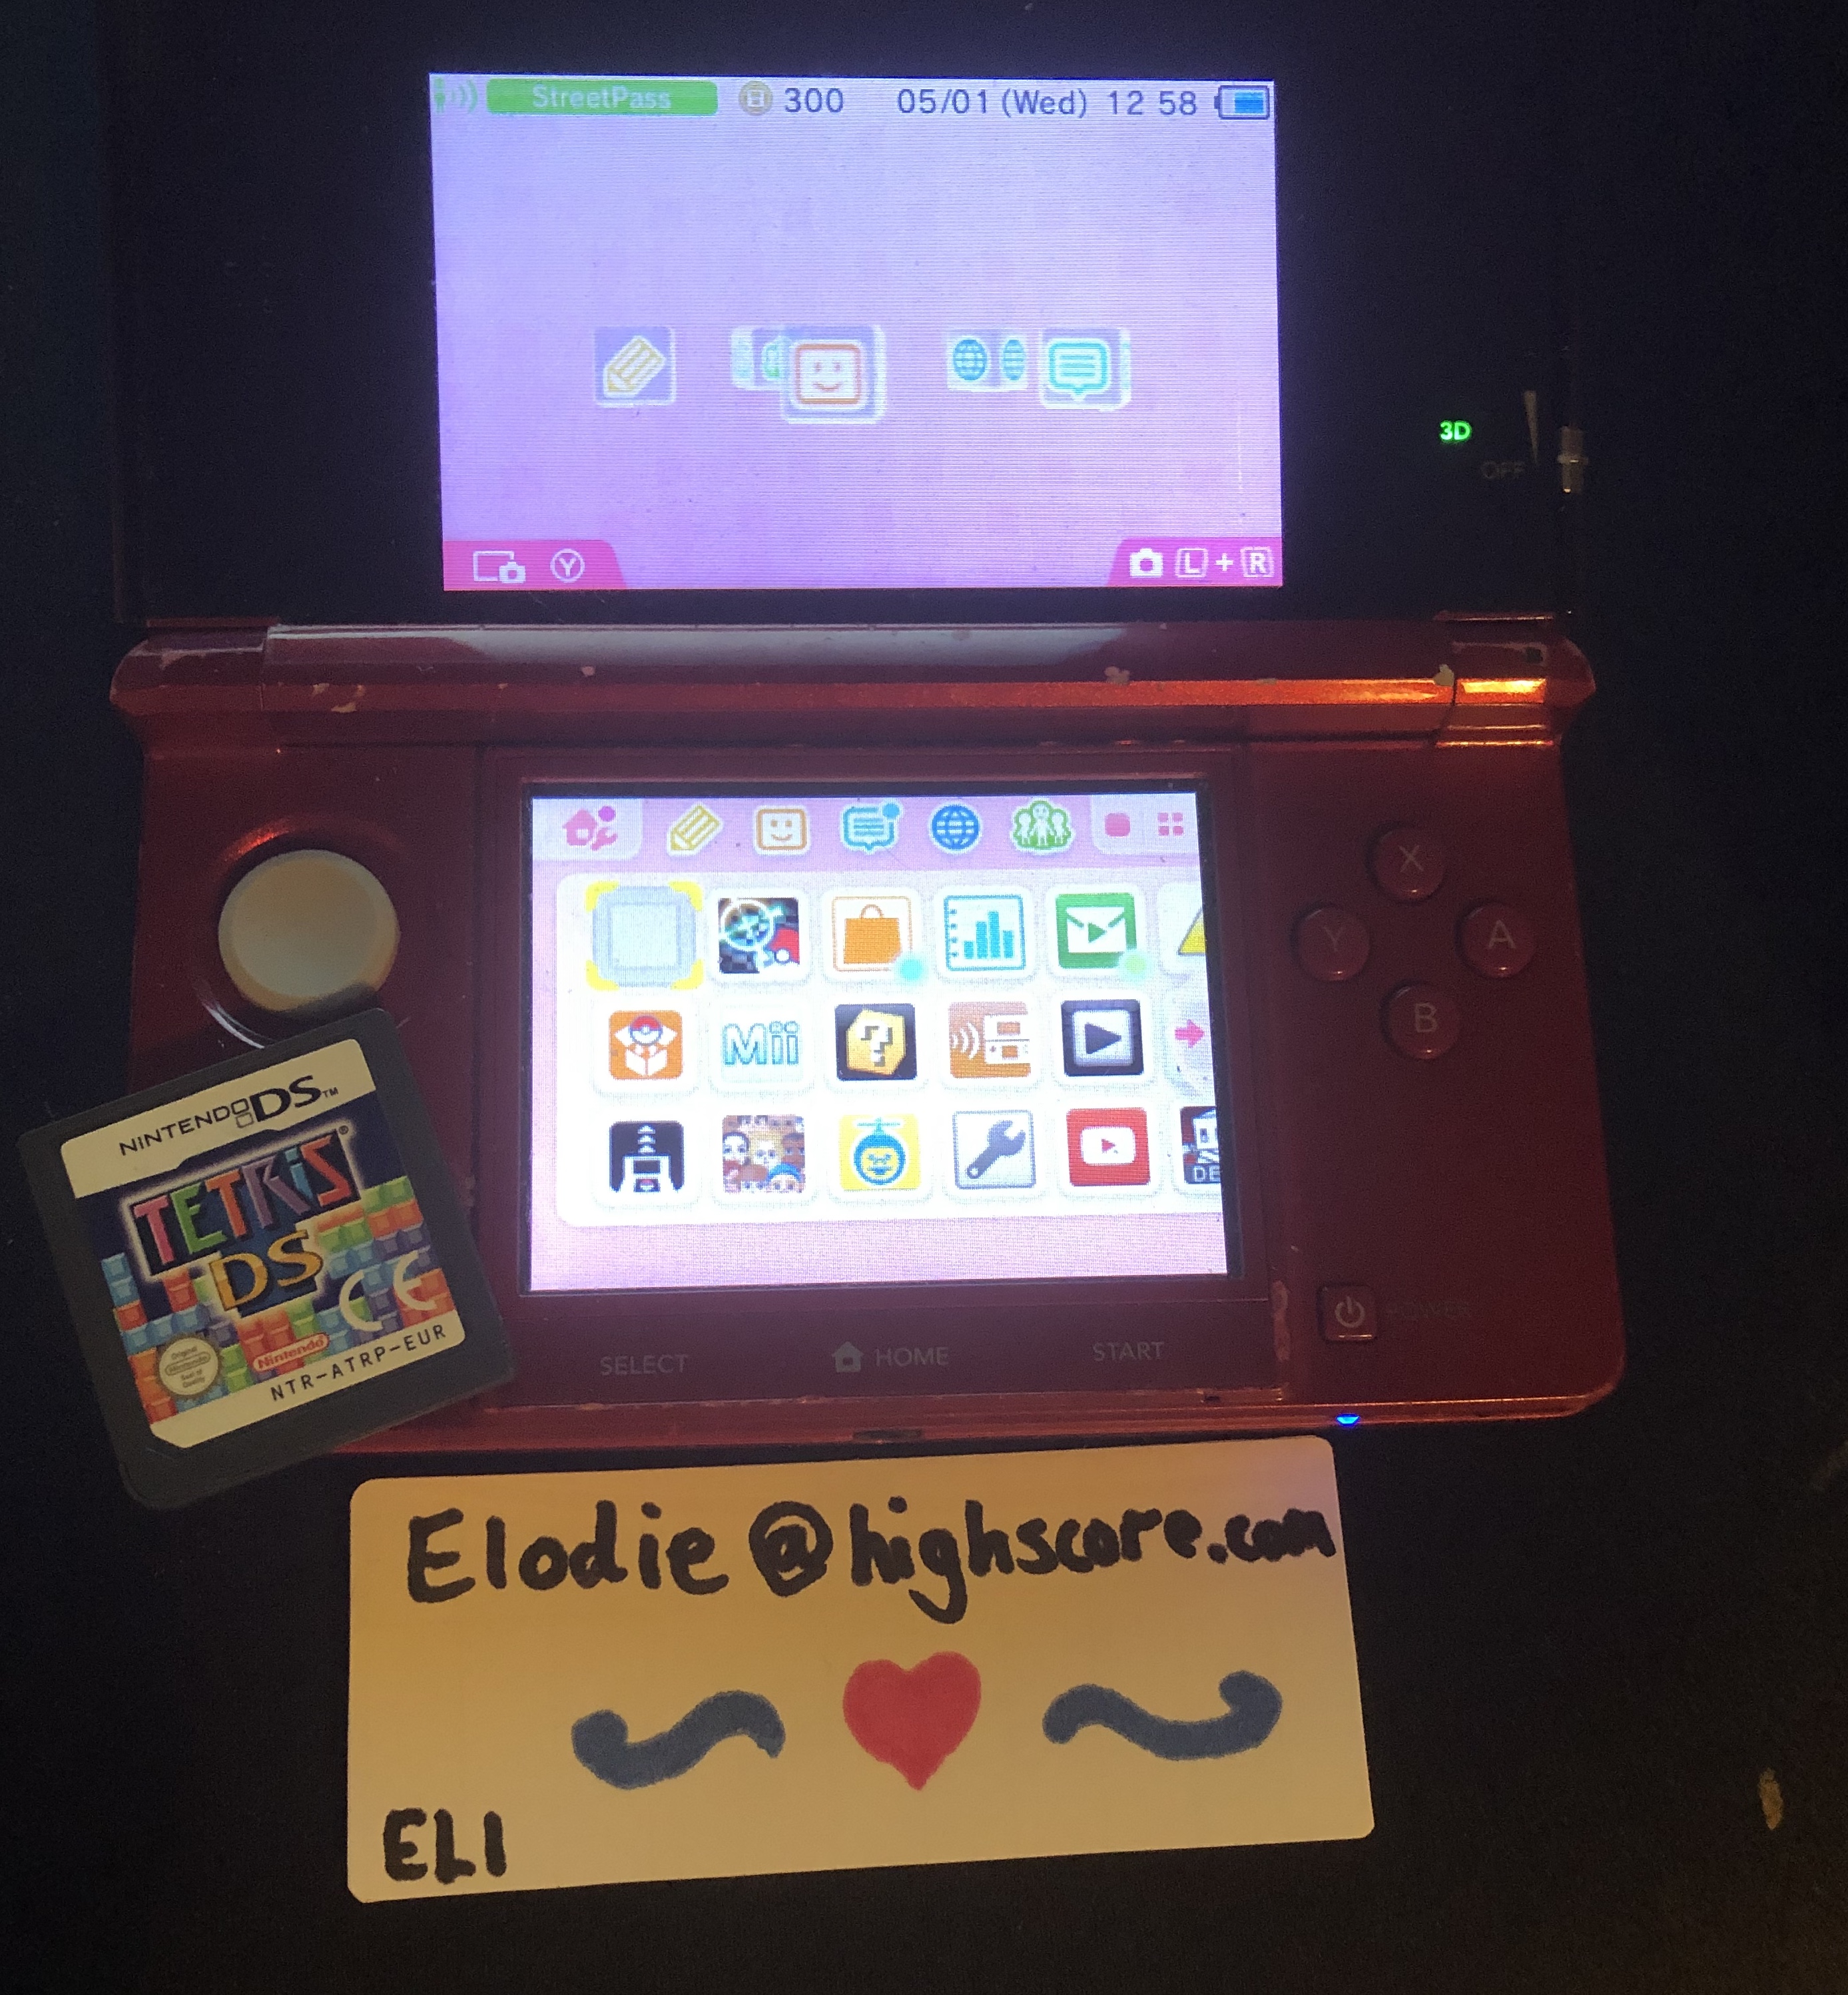 Elodie: Tetris DS Standard/Marathon [Endless On] (Nintendo DS) 26,075,773 points on 2020-02-13 20:55:26